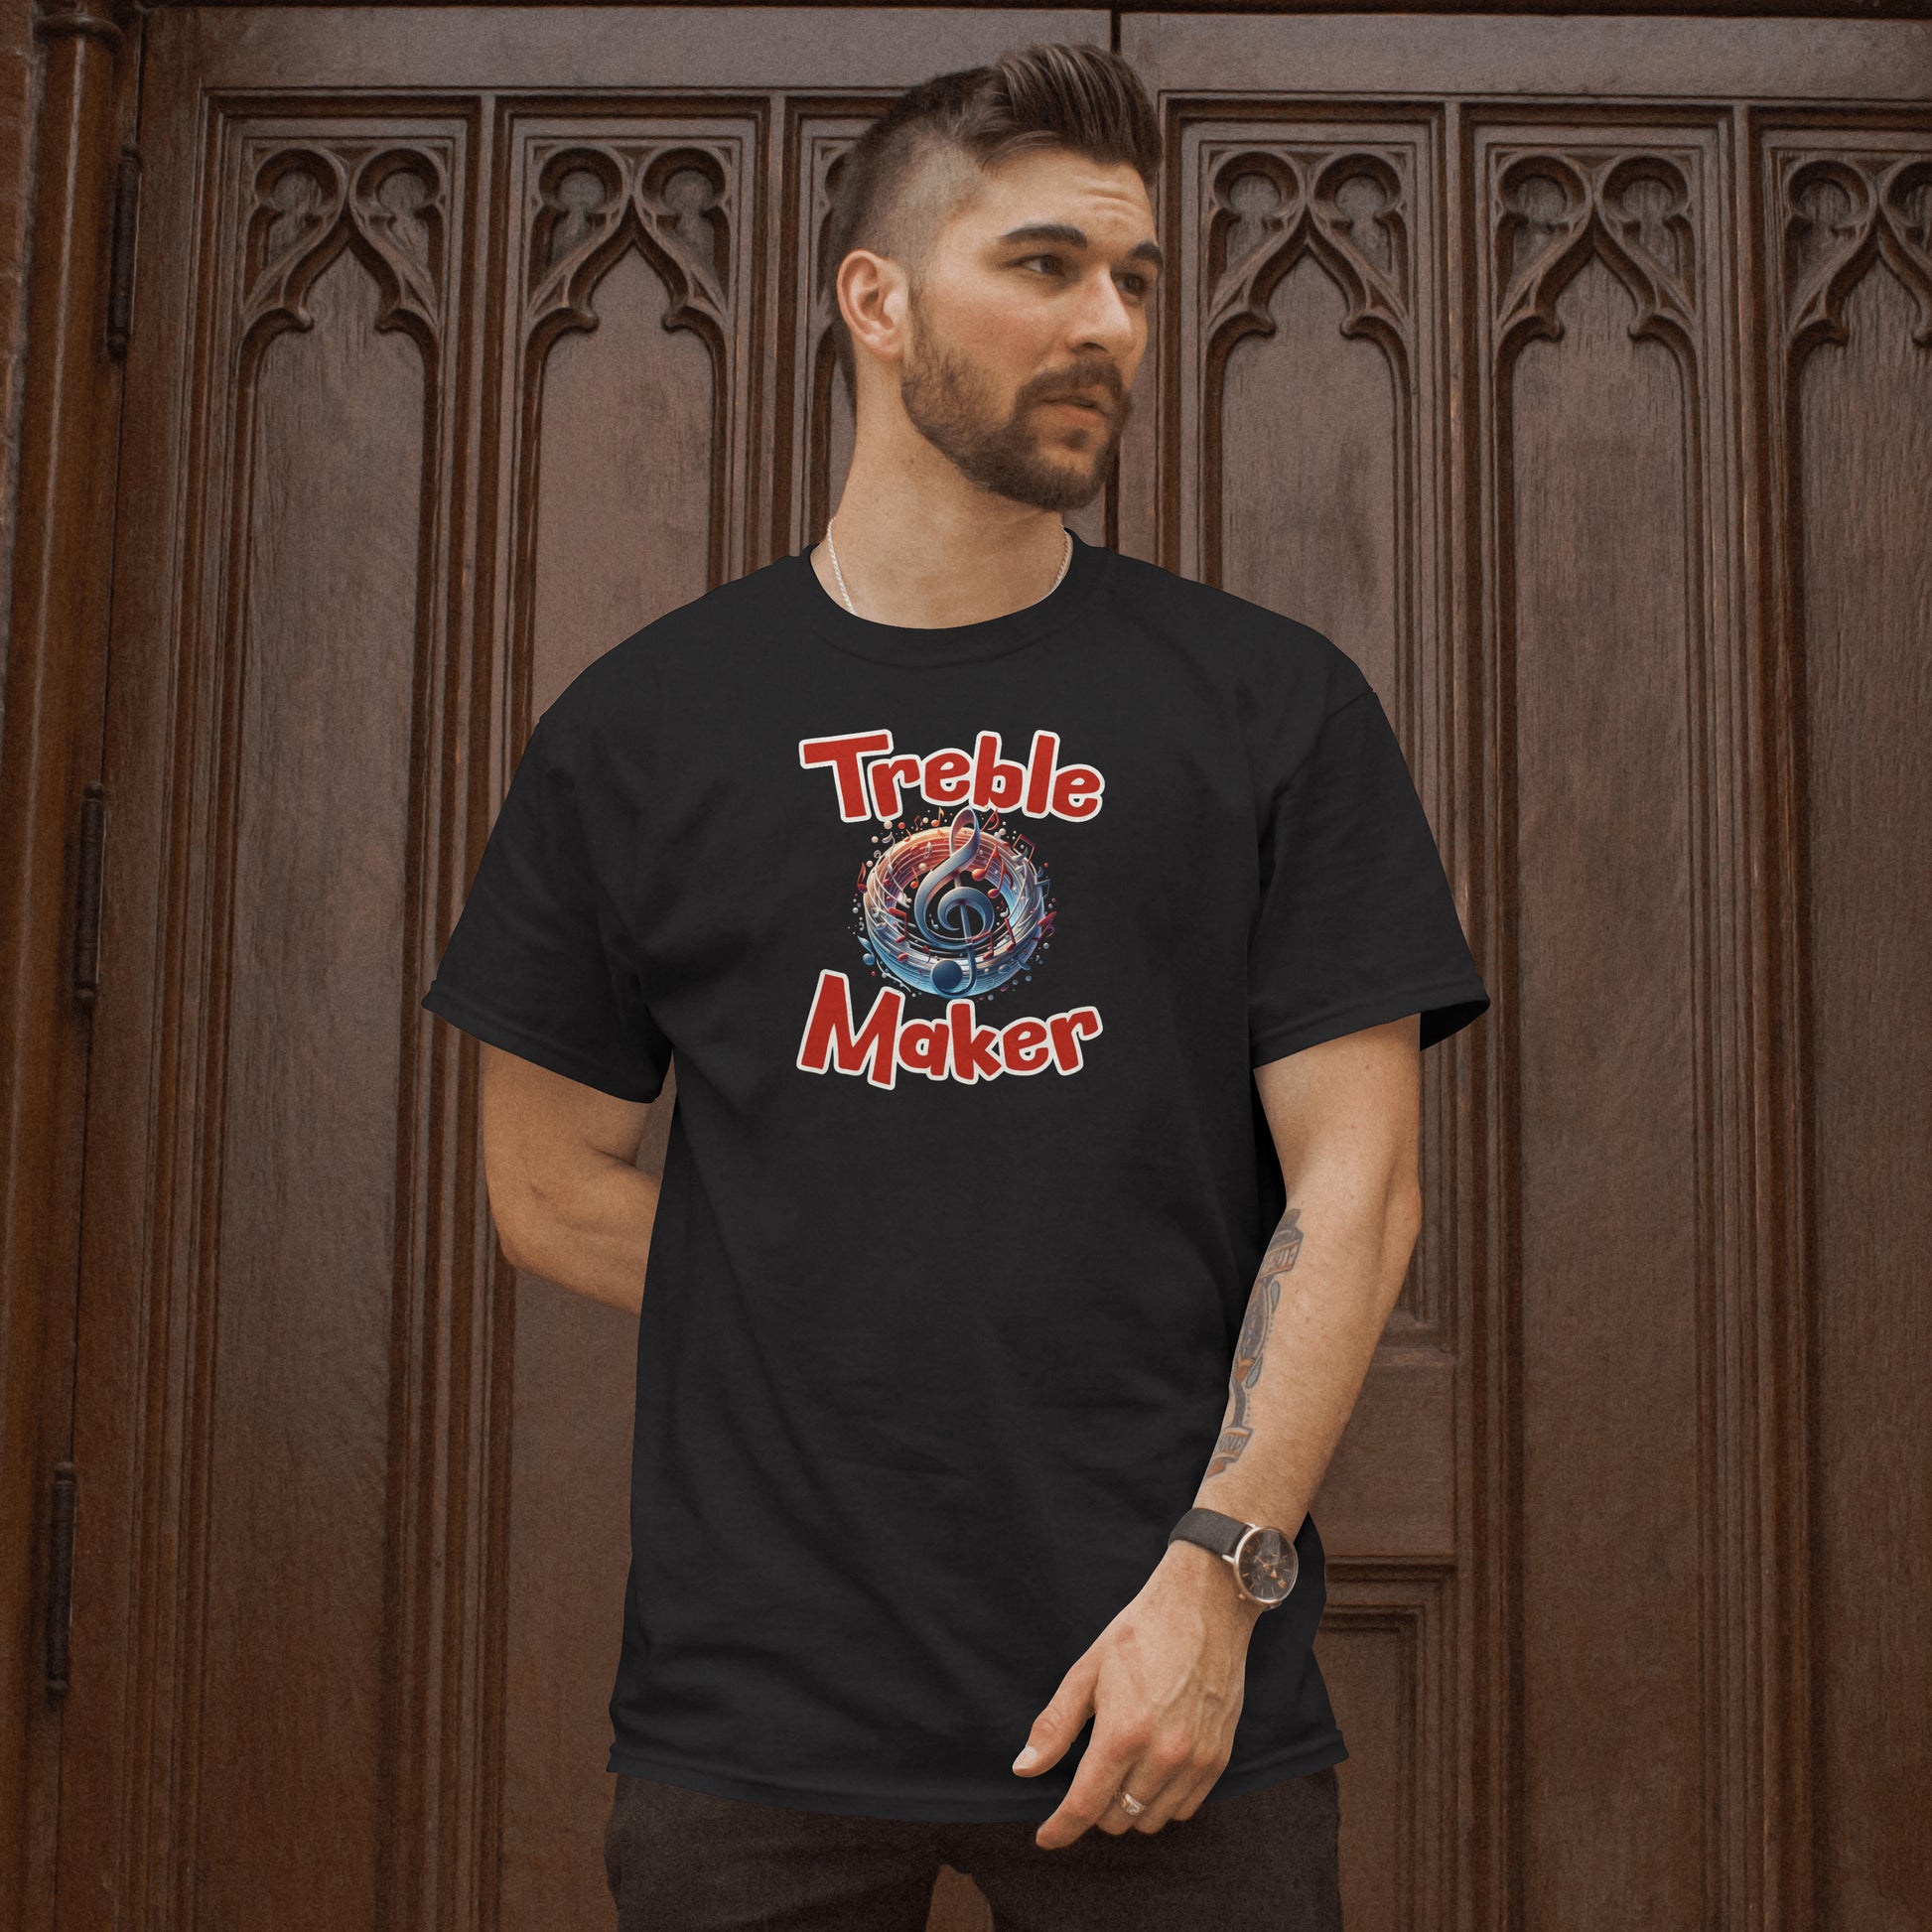 Treble Maker T-shirt worn by model with black color shirt design 